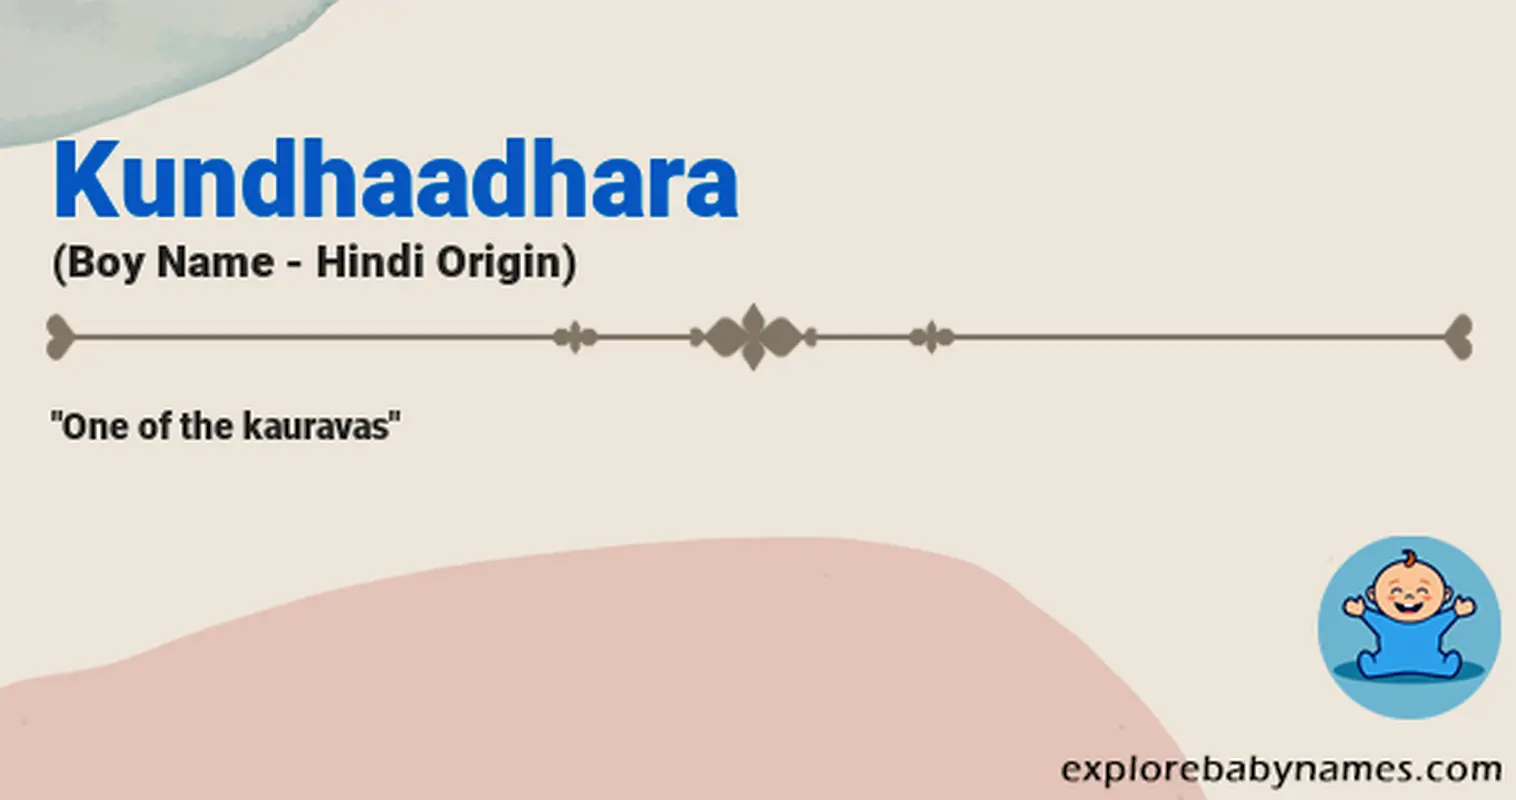 Meaning of Kundhaadhara